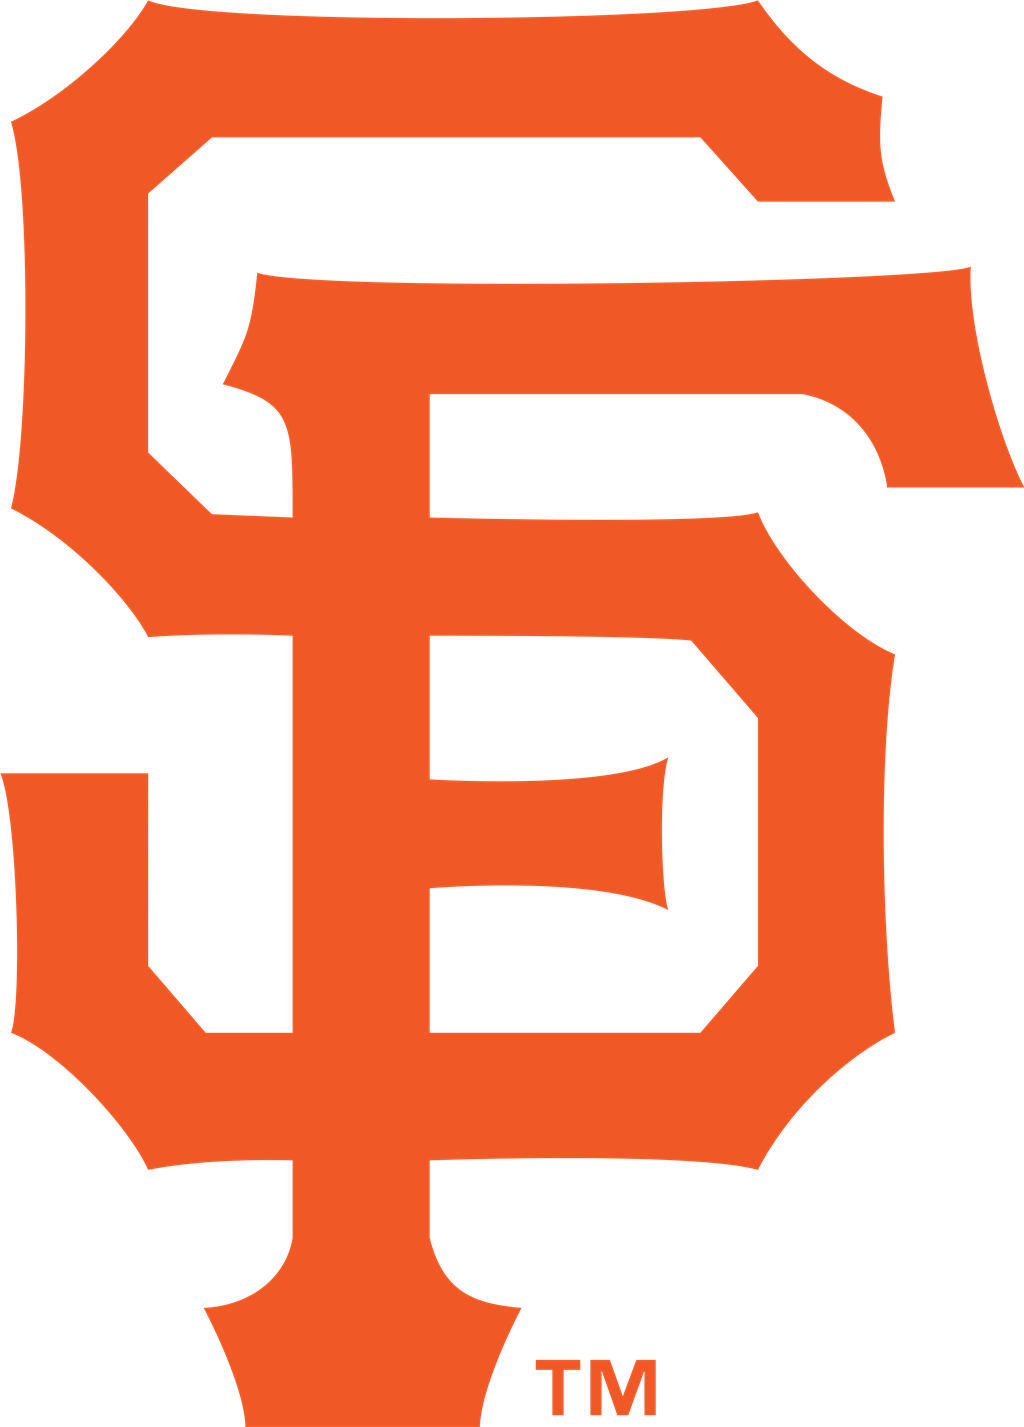 San Francisco Giants logotype, transparent .png, medium, large